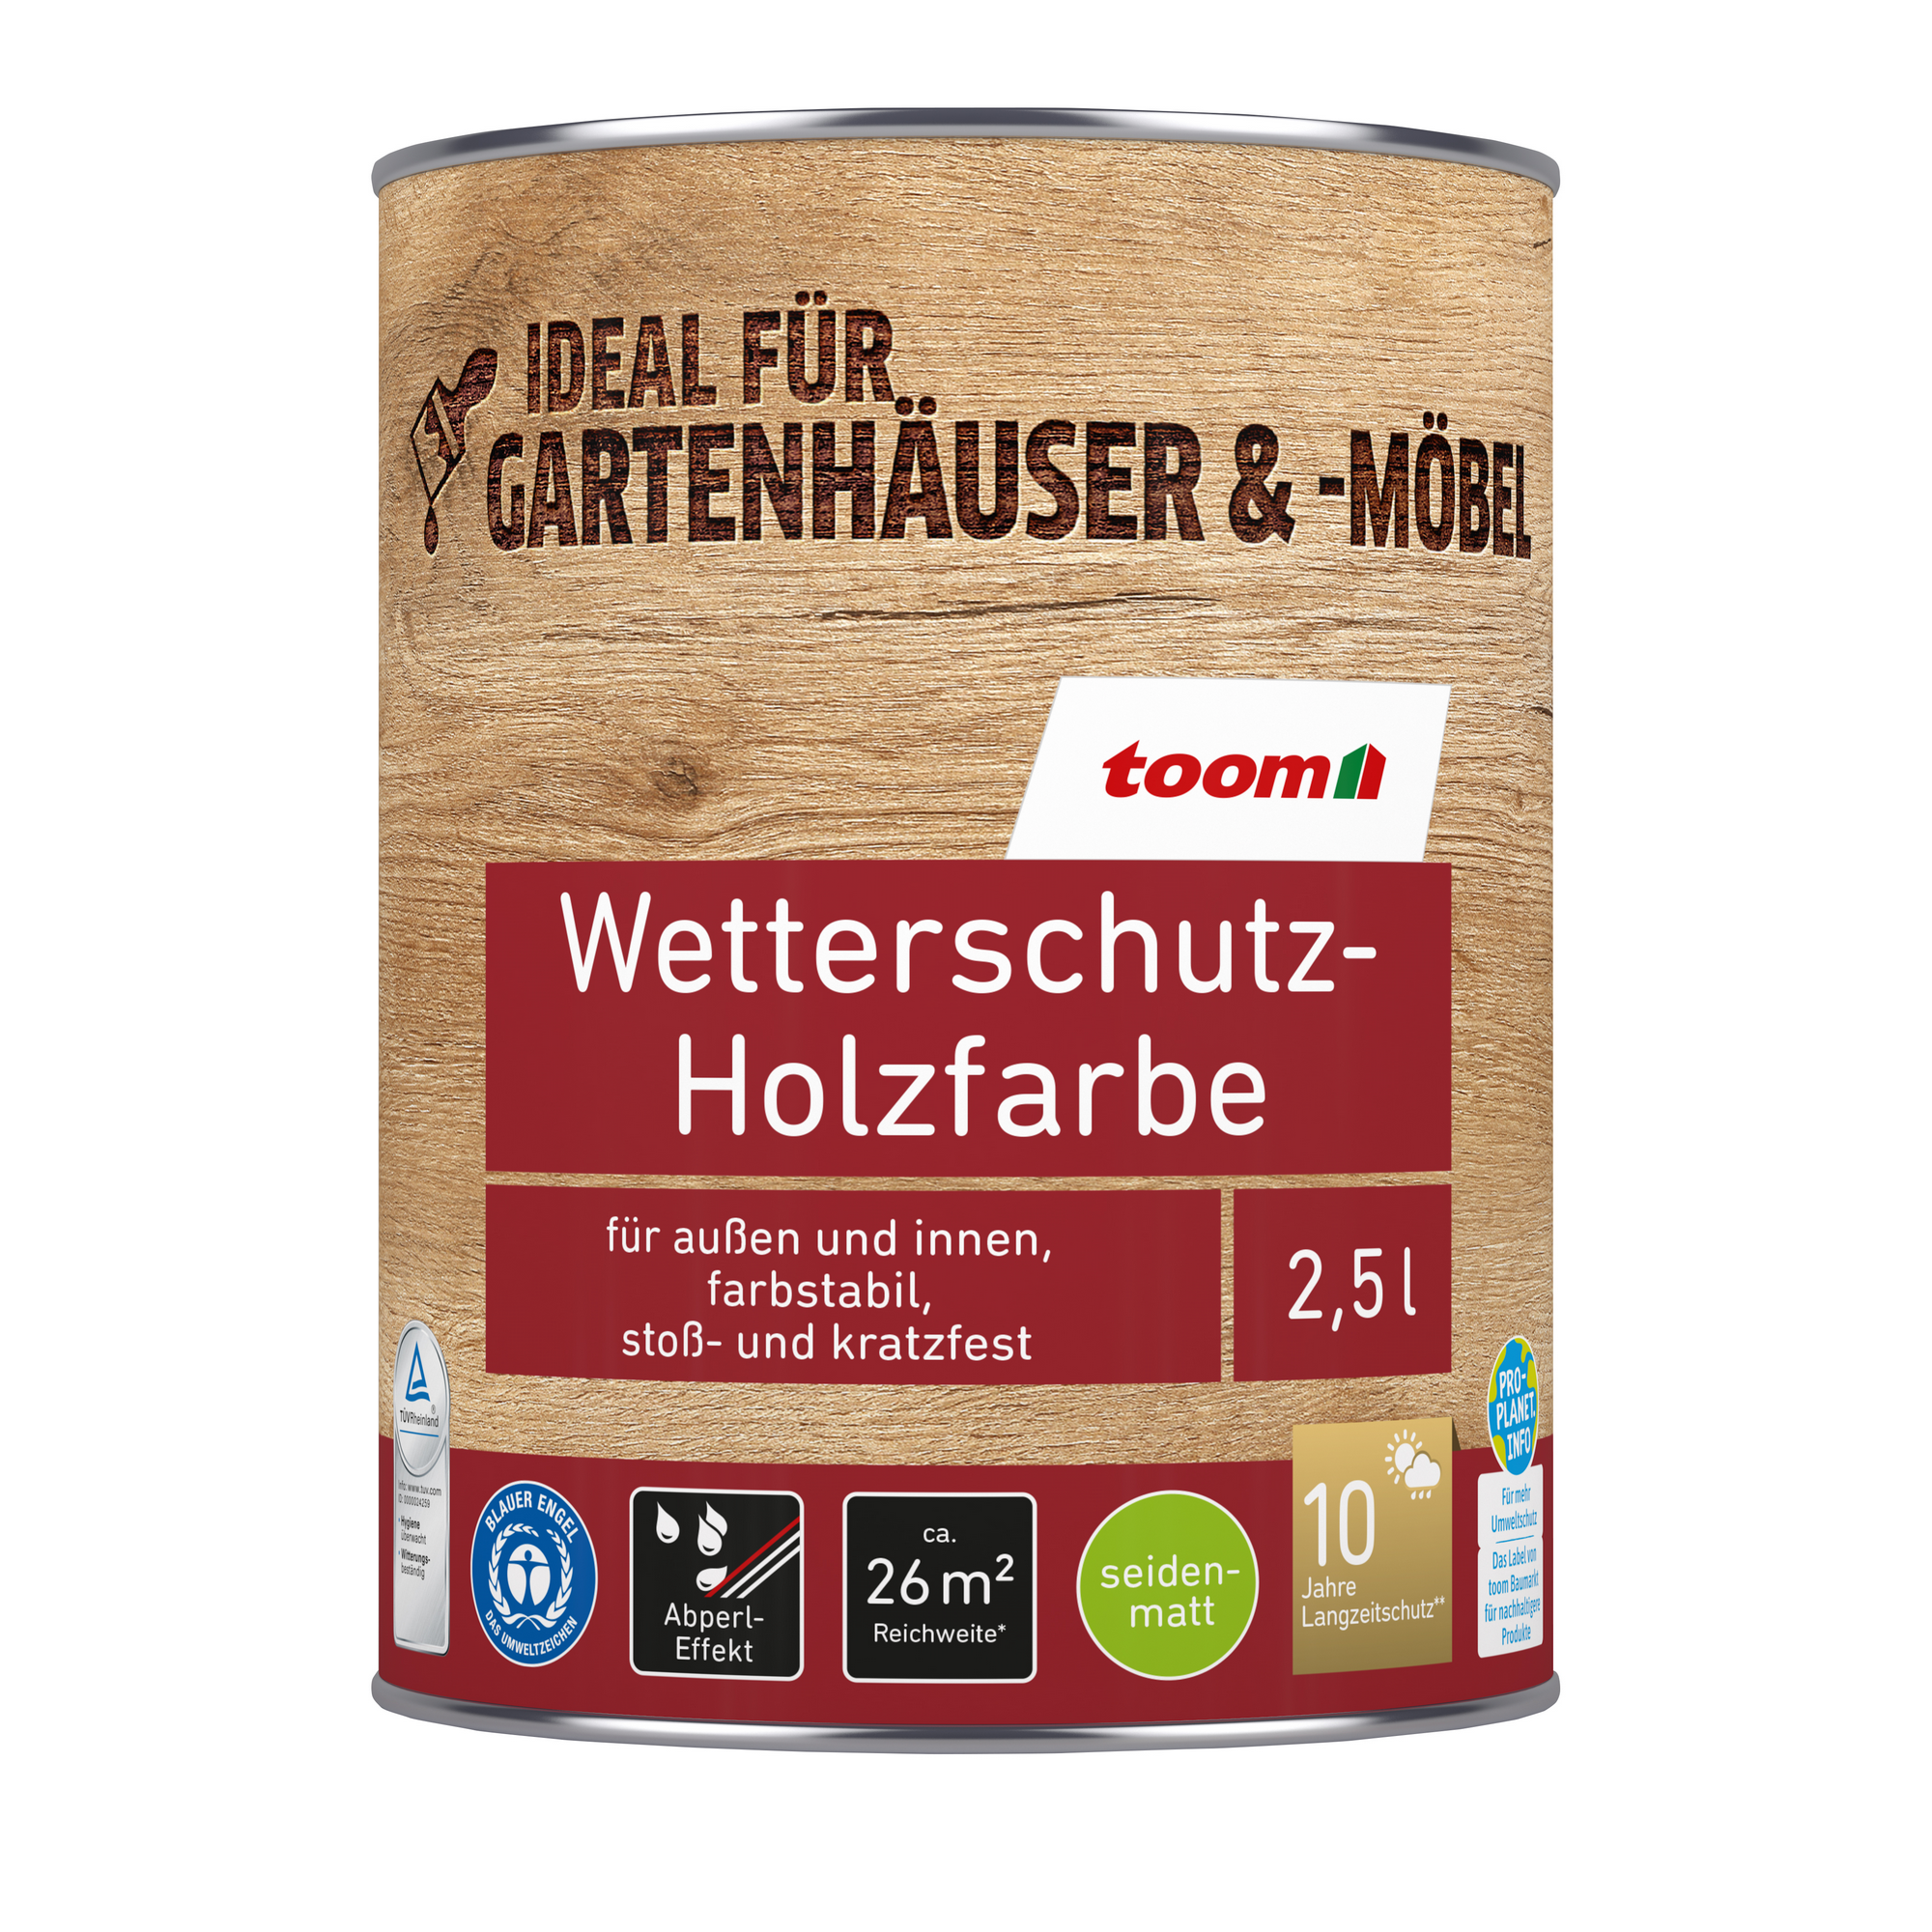 Wetterschutz-Holzfarbe cremeweiß 2,5 l + product picture